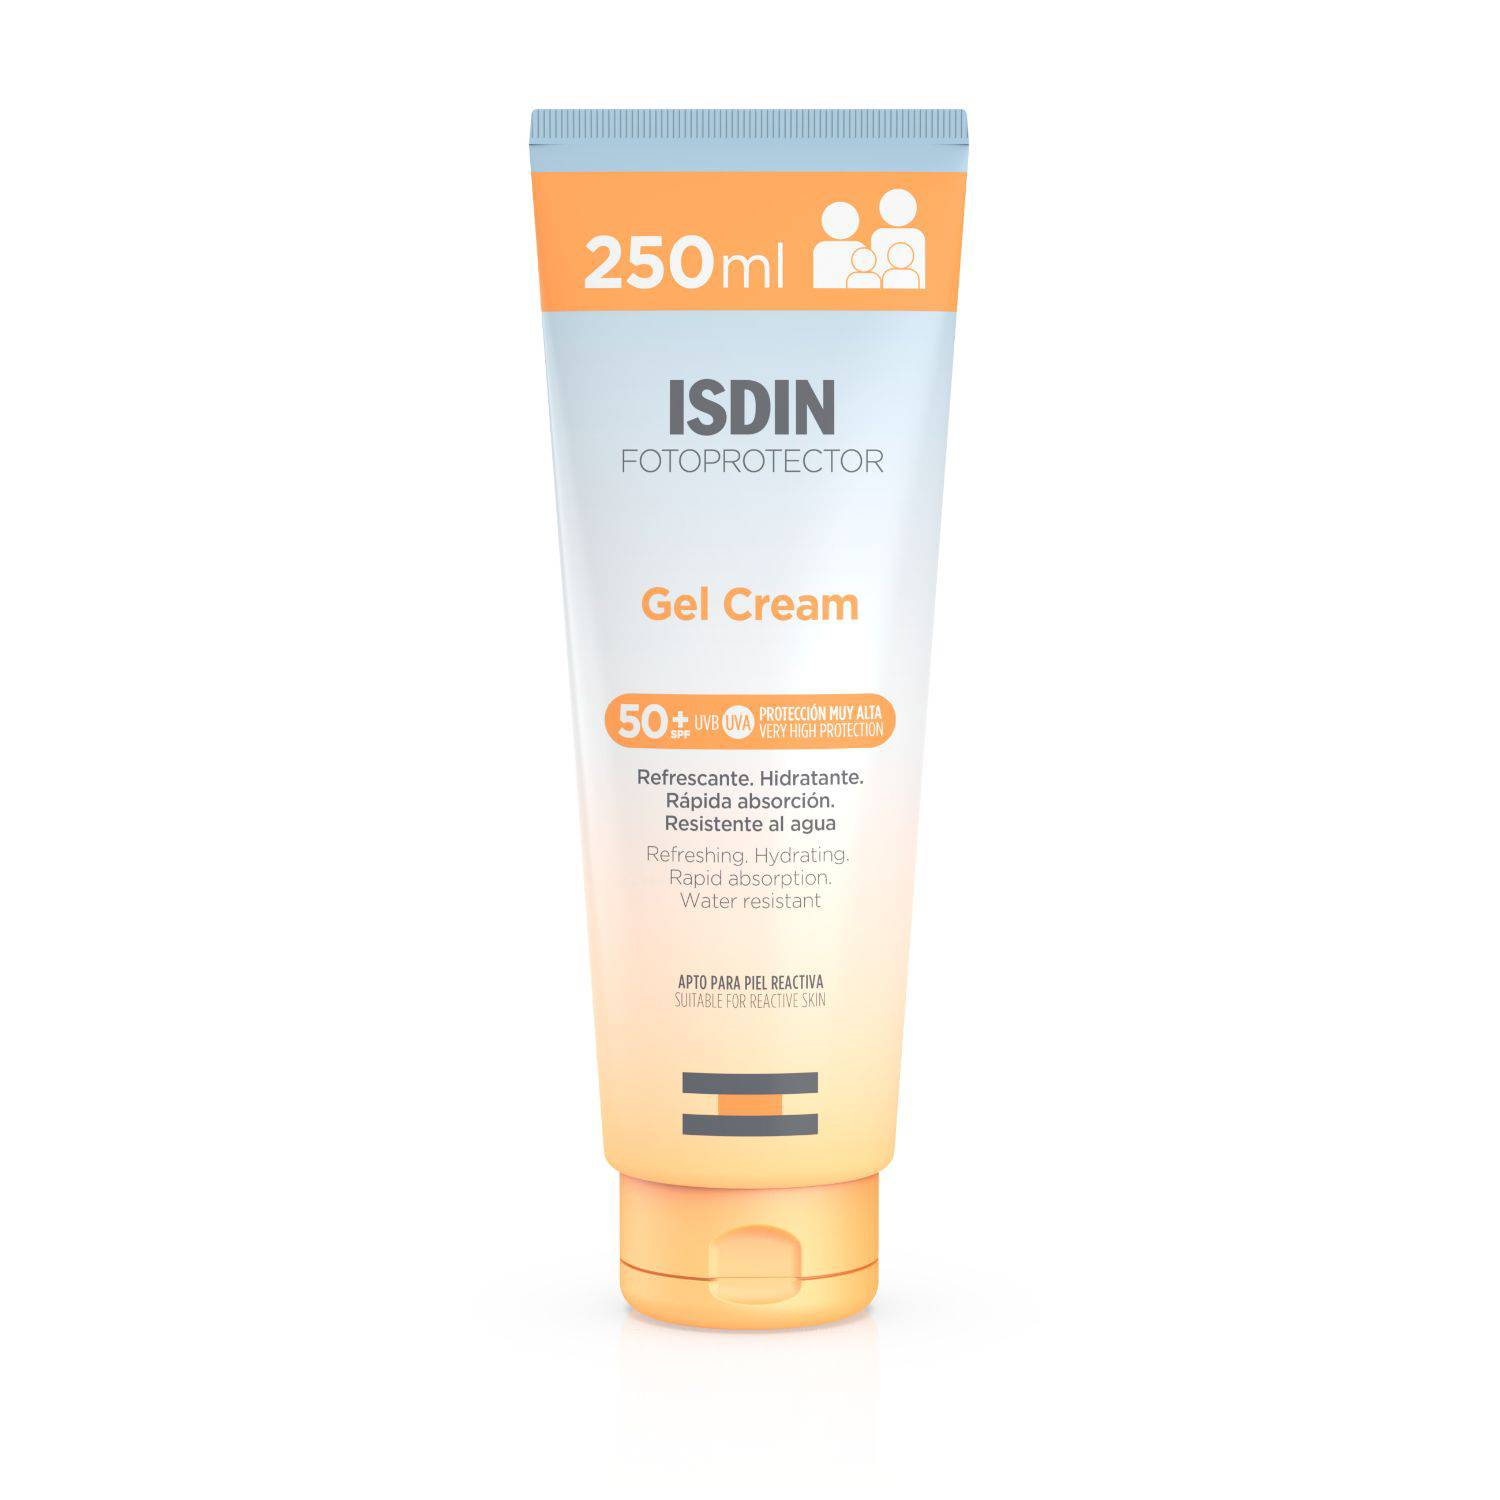 ISDIN Fotoprotector Gel Cream SPF50 250ml 